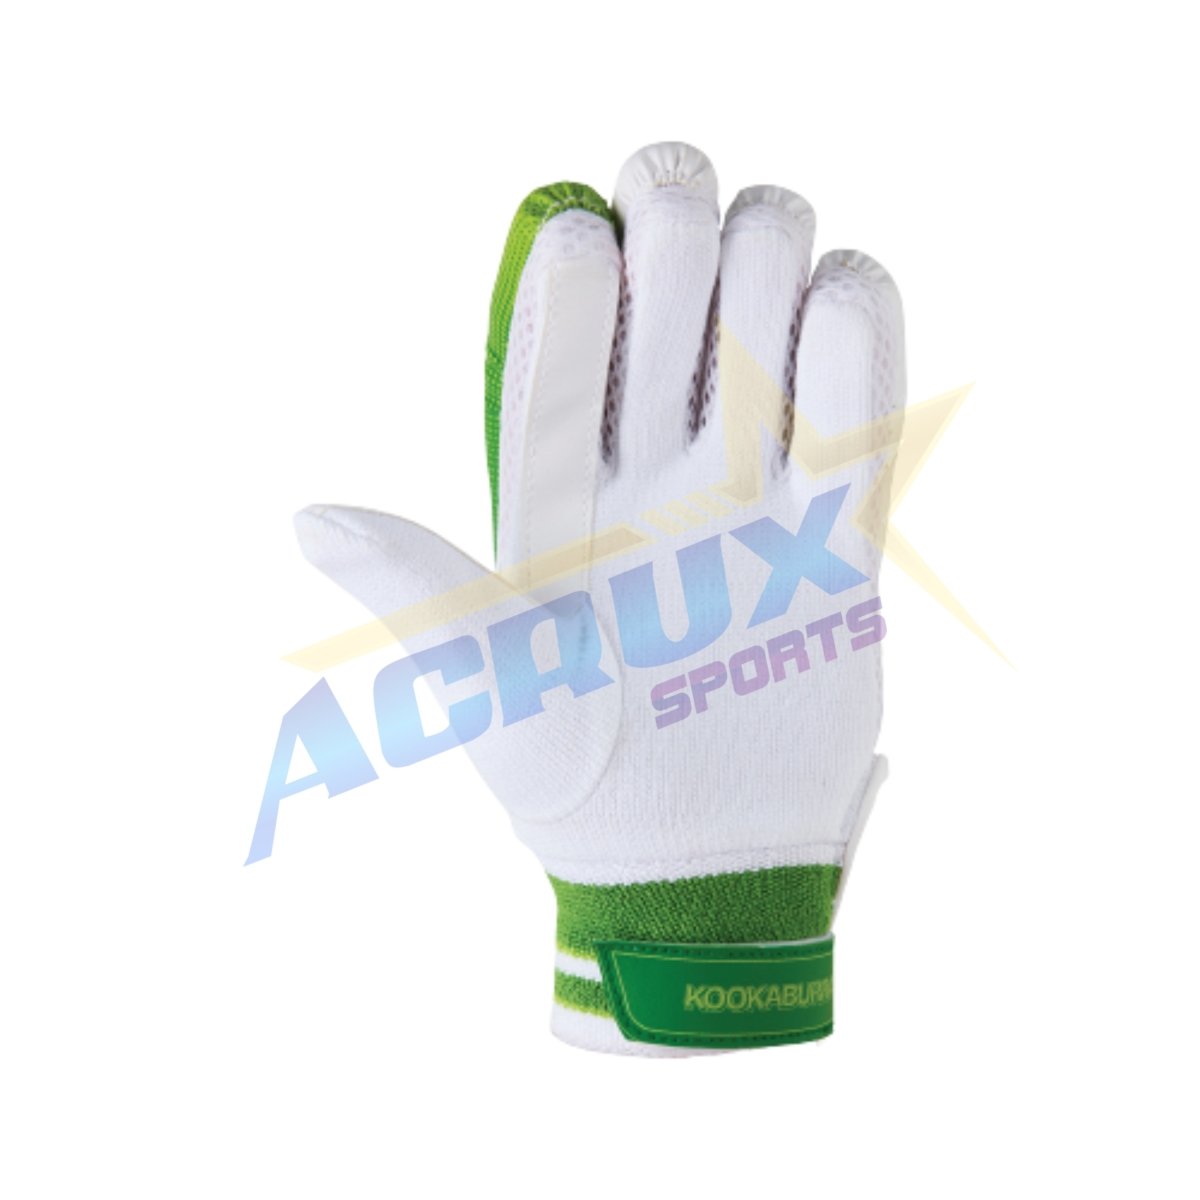 Kookaburra Kahuna Pro 9.0 Cricket Batting Gloves.